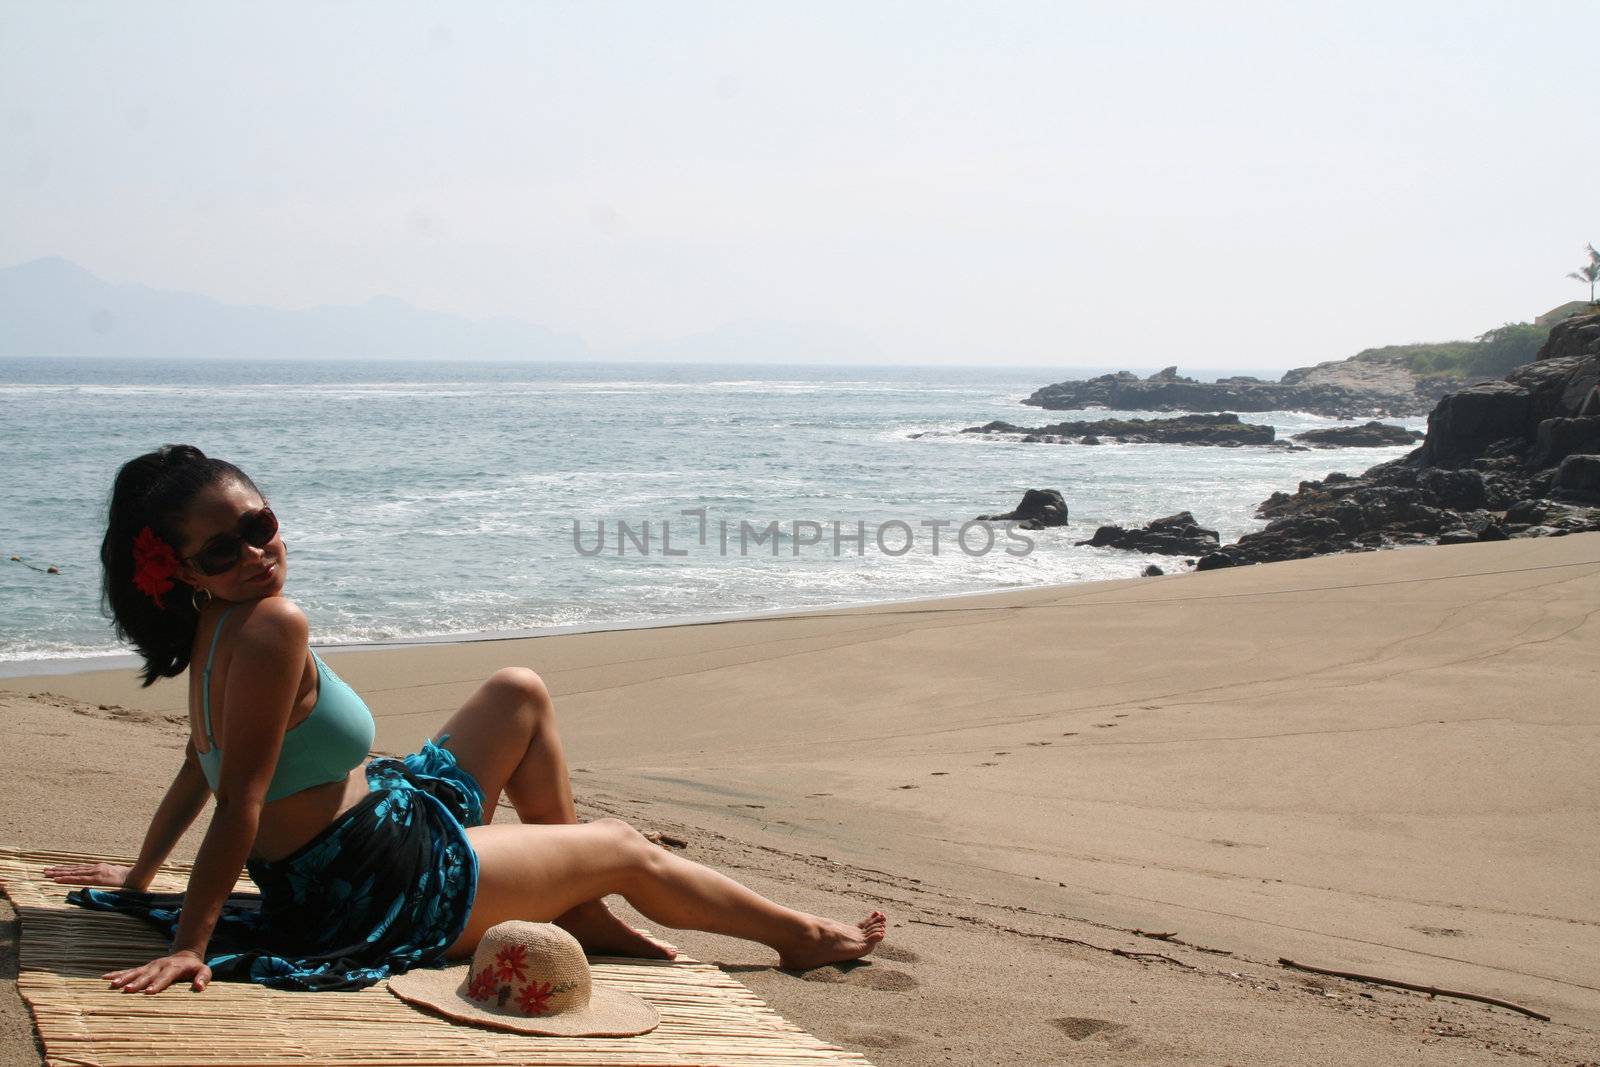 Young Latin woman sitting on beach